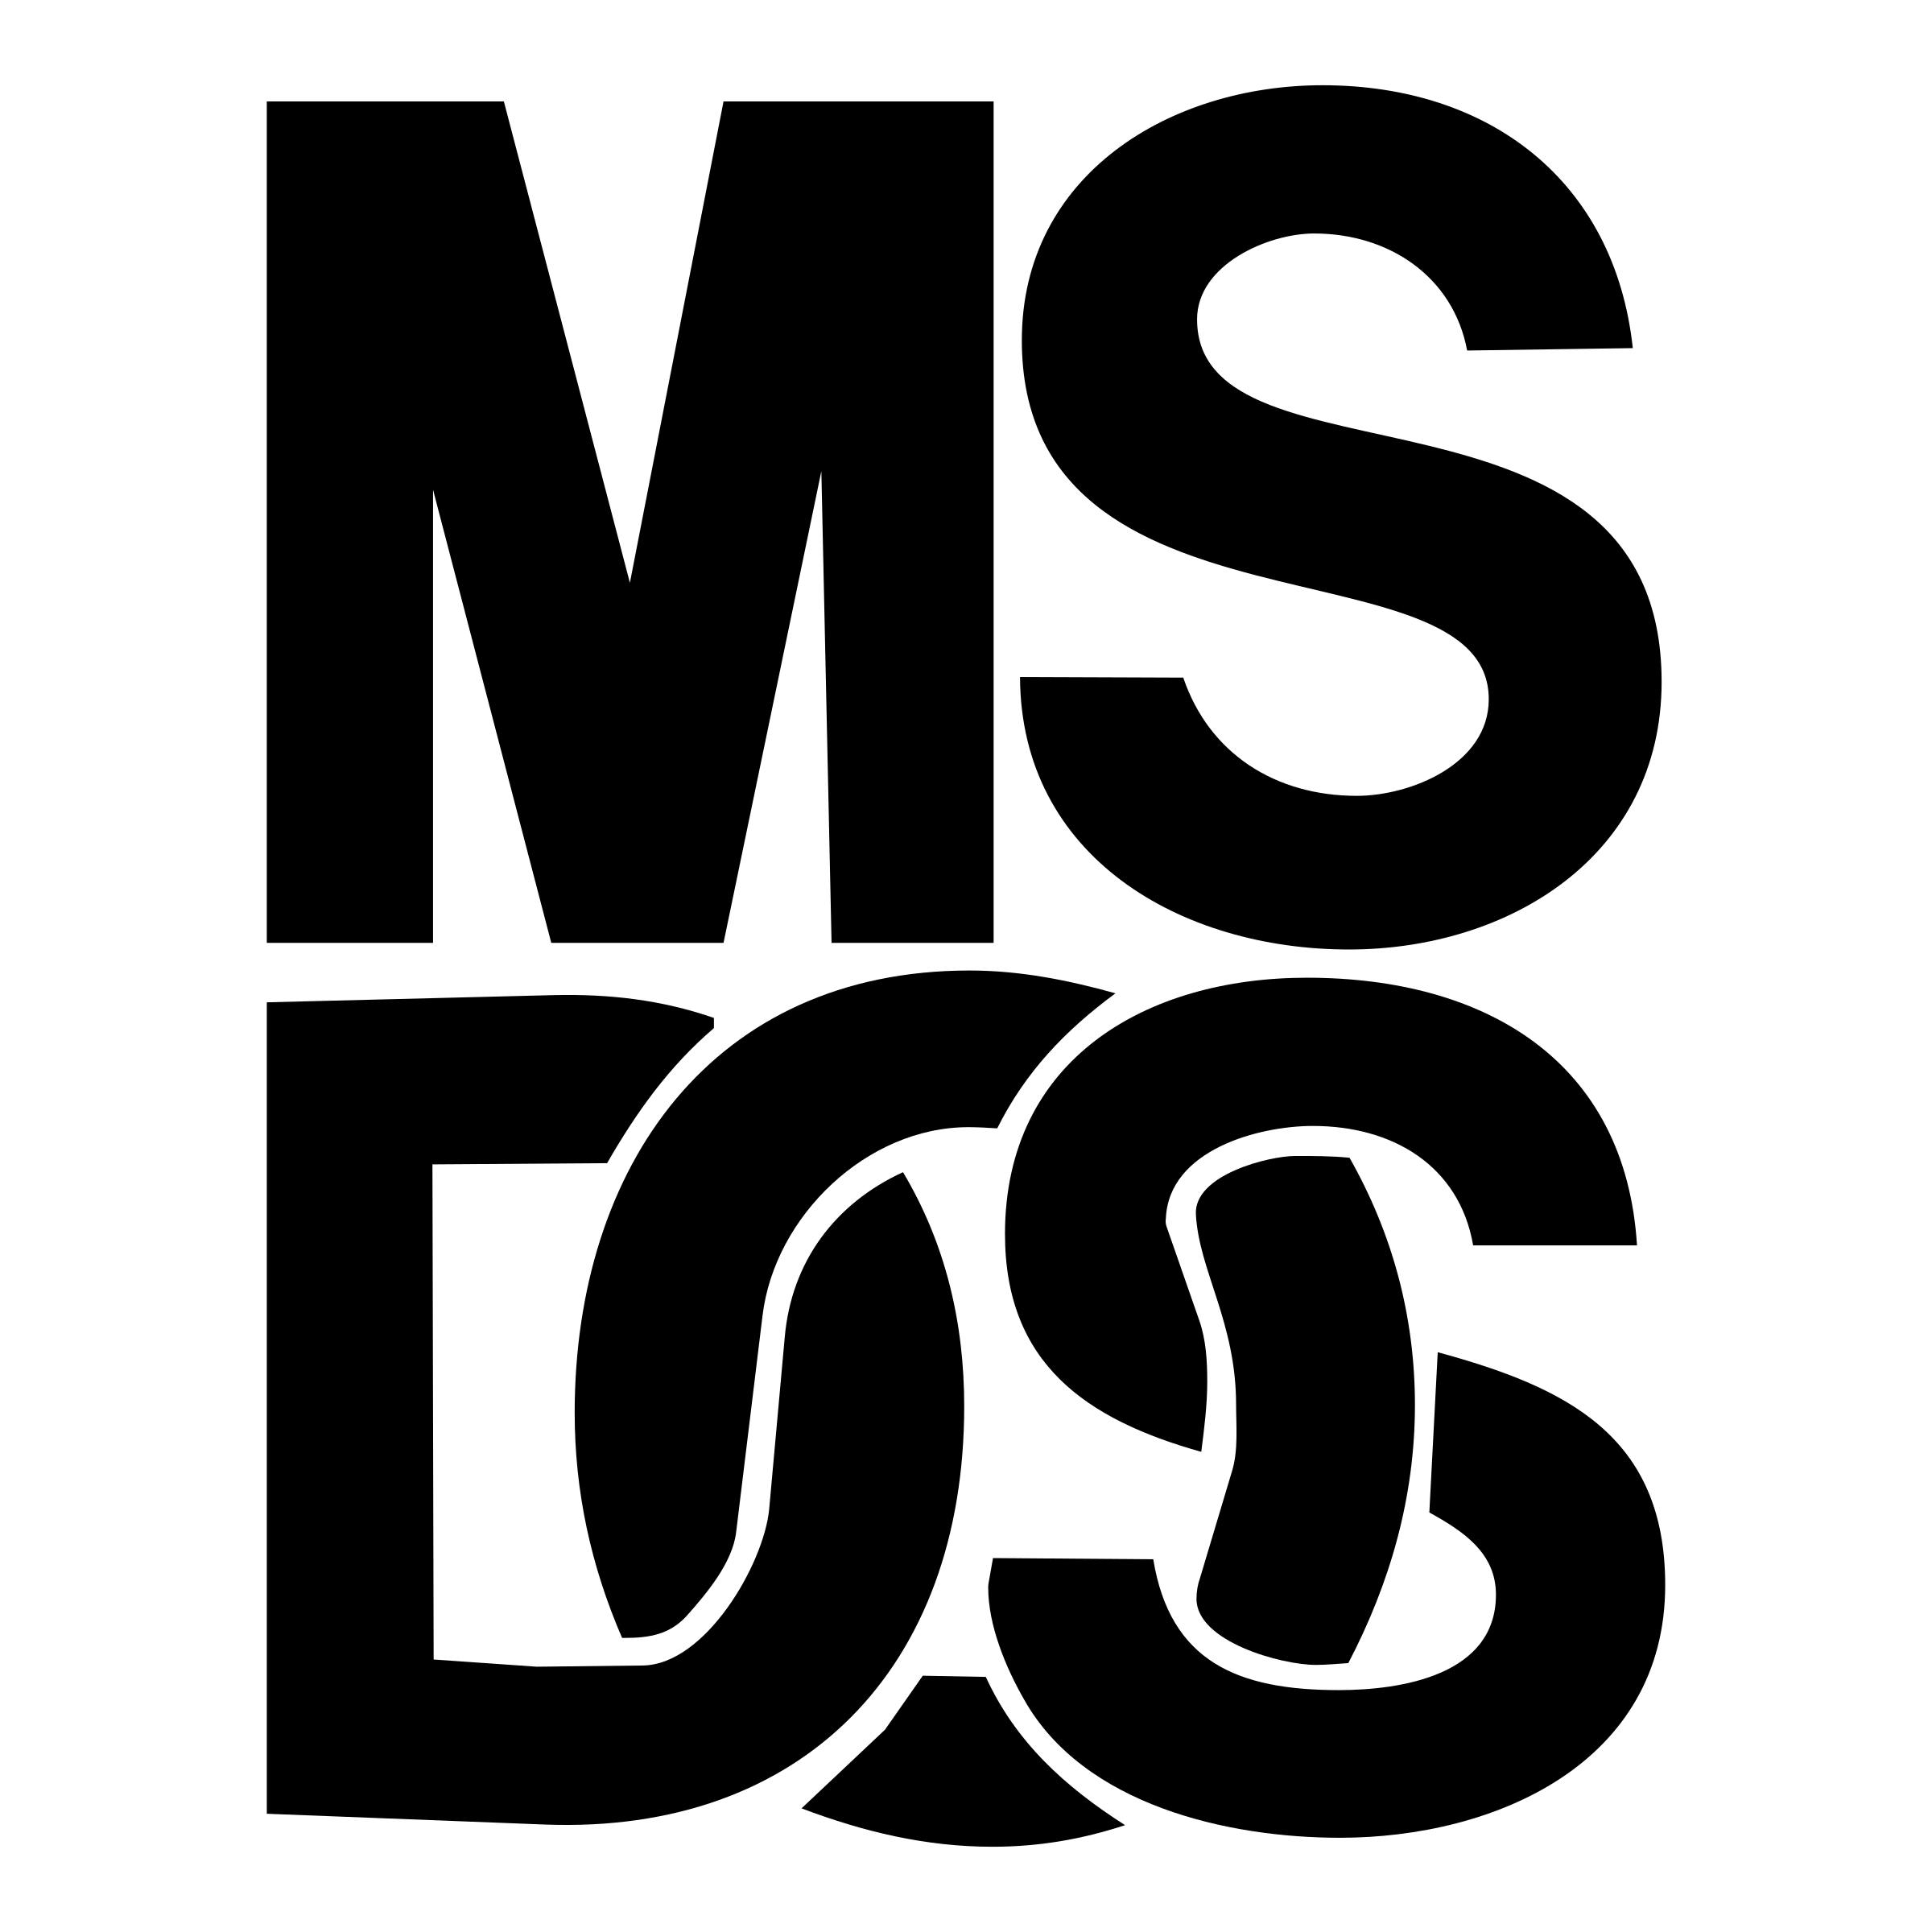 MS-DOS Logo - MS DOS Logo PNG Transparent & SVG Vector - Freebie Supply